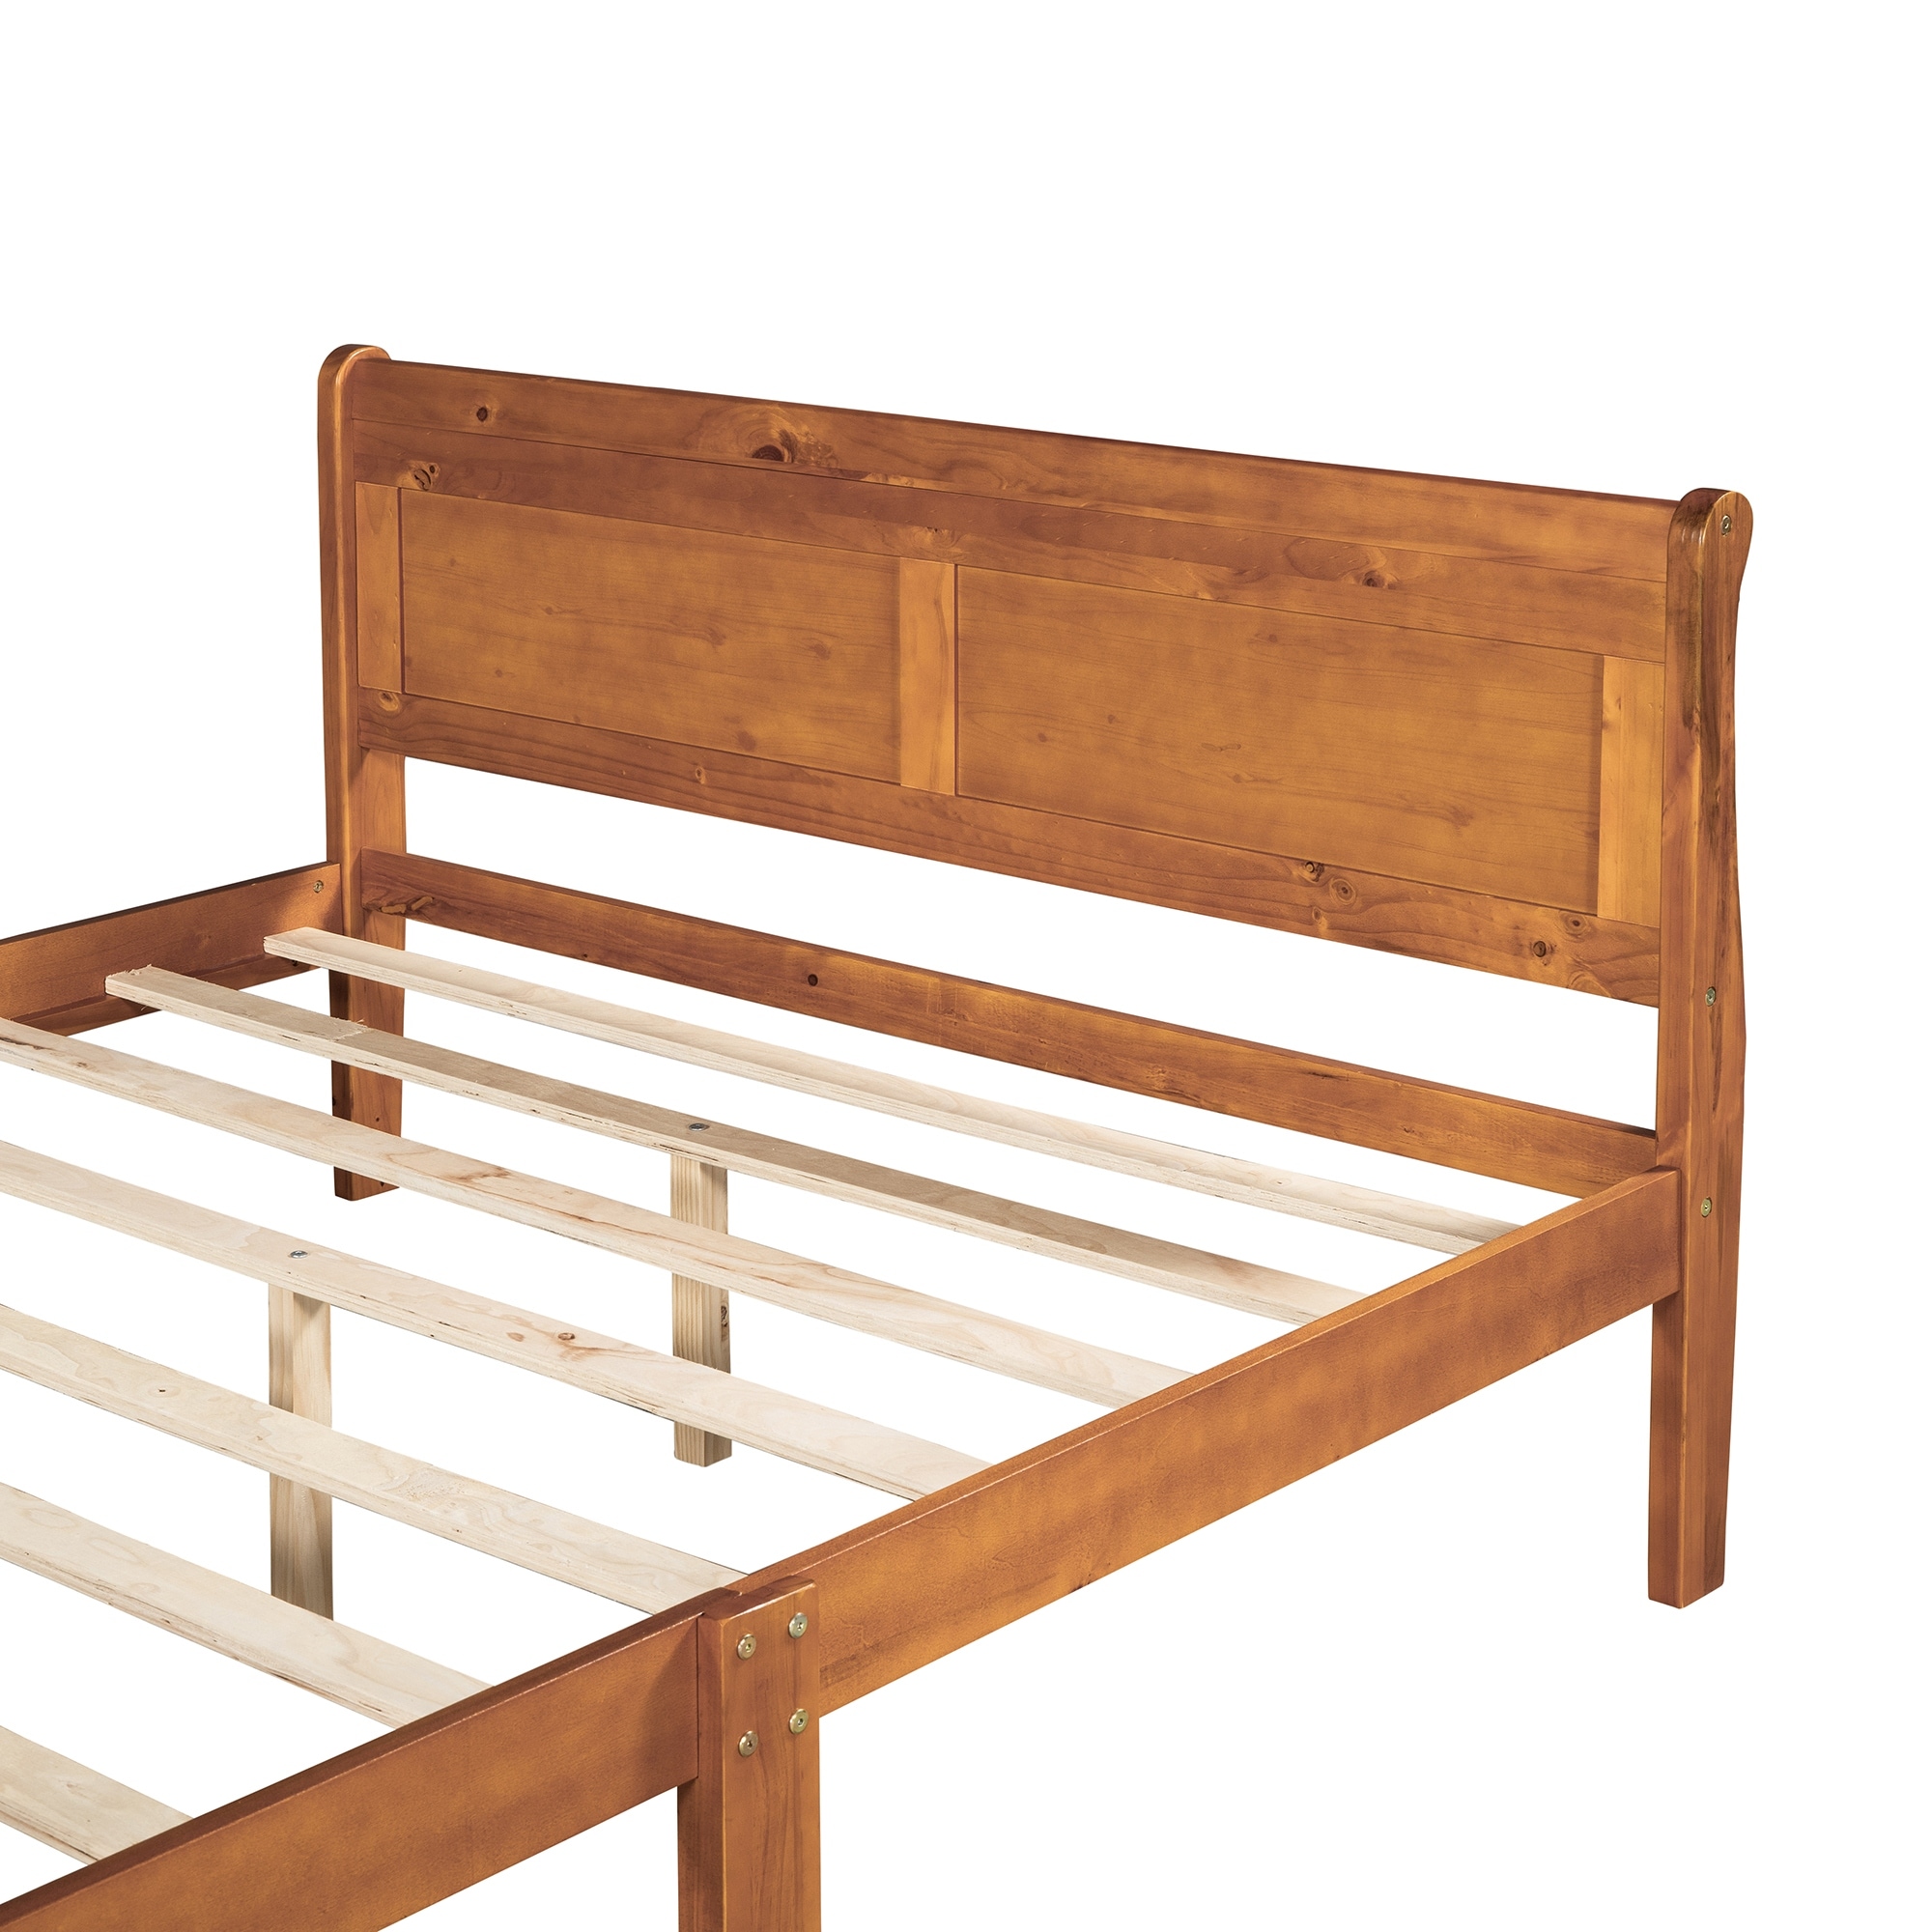 Queen Size Platform Bed Mattress Foundation Sleigh Bed with Headboard